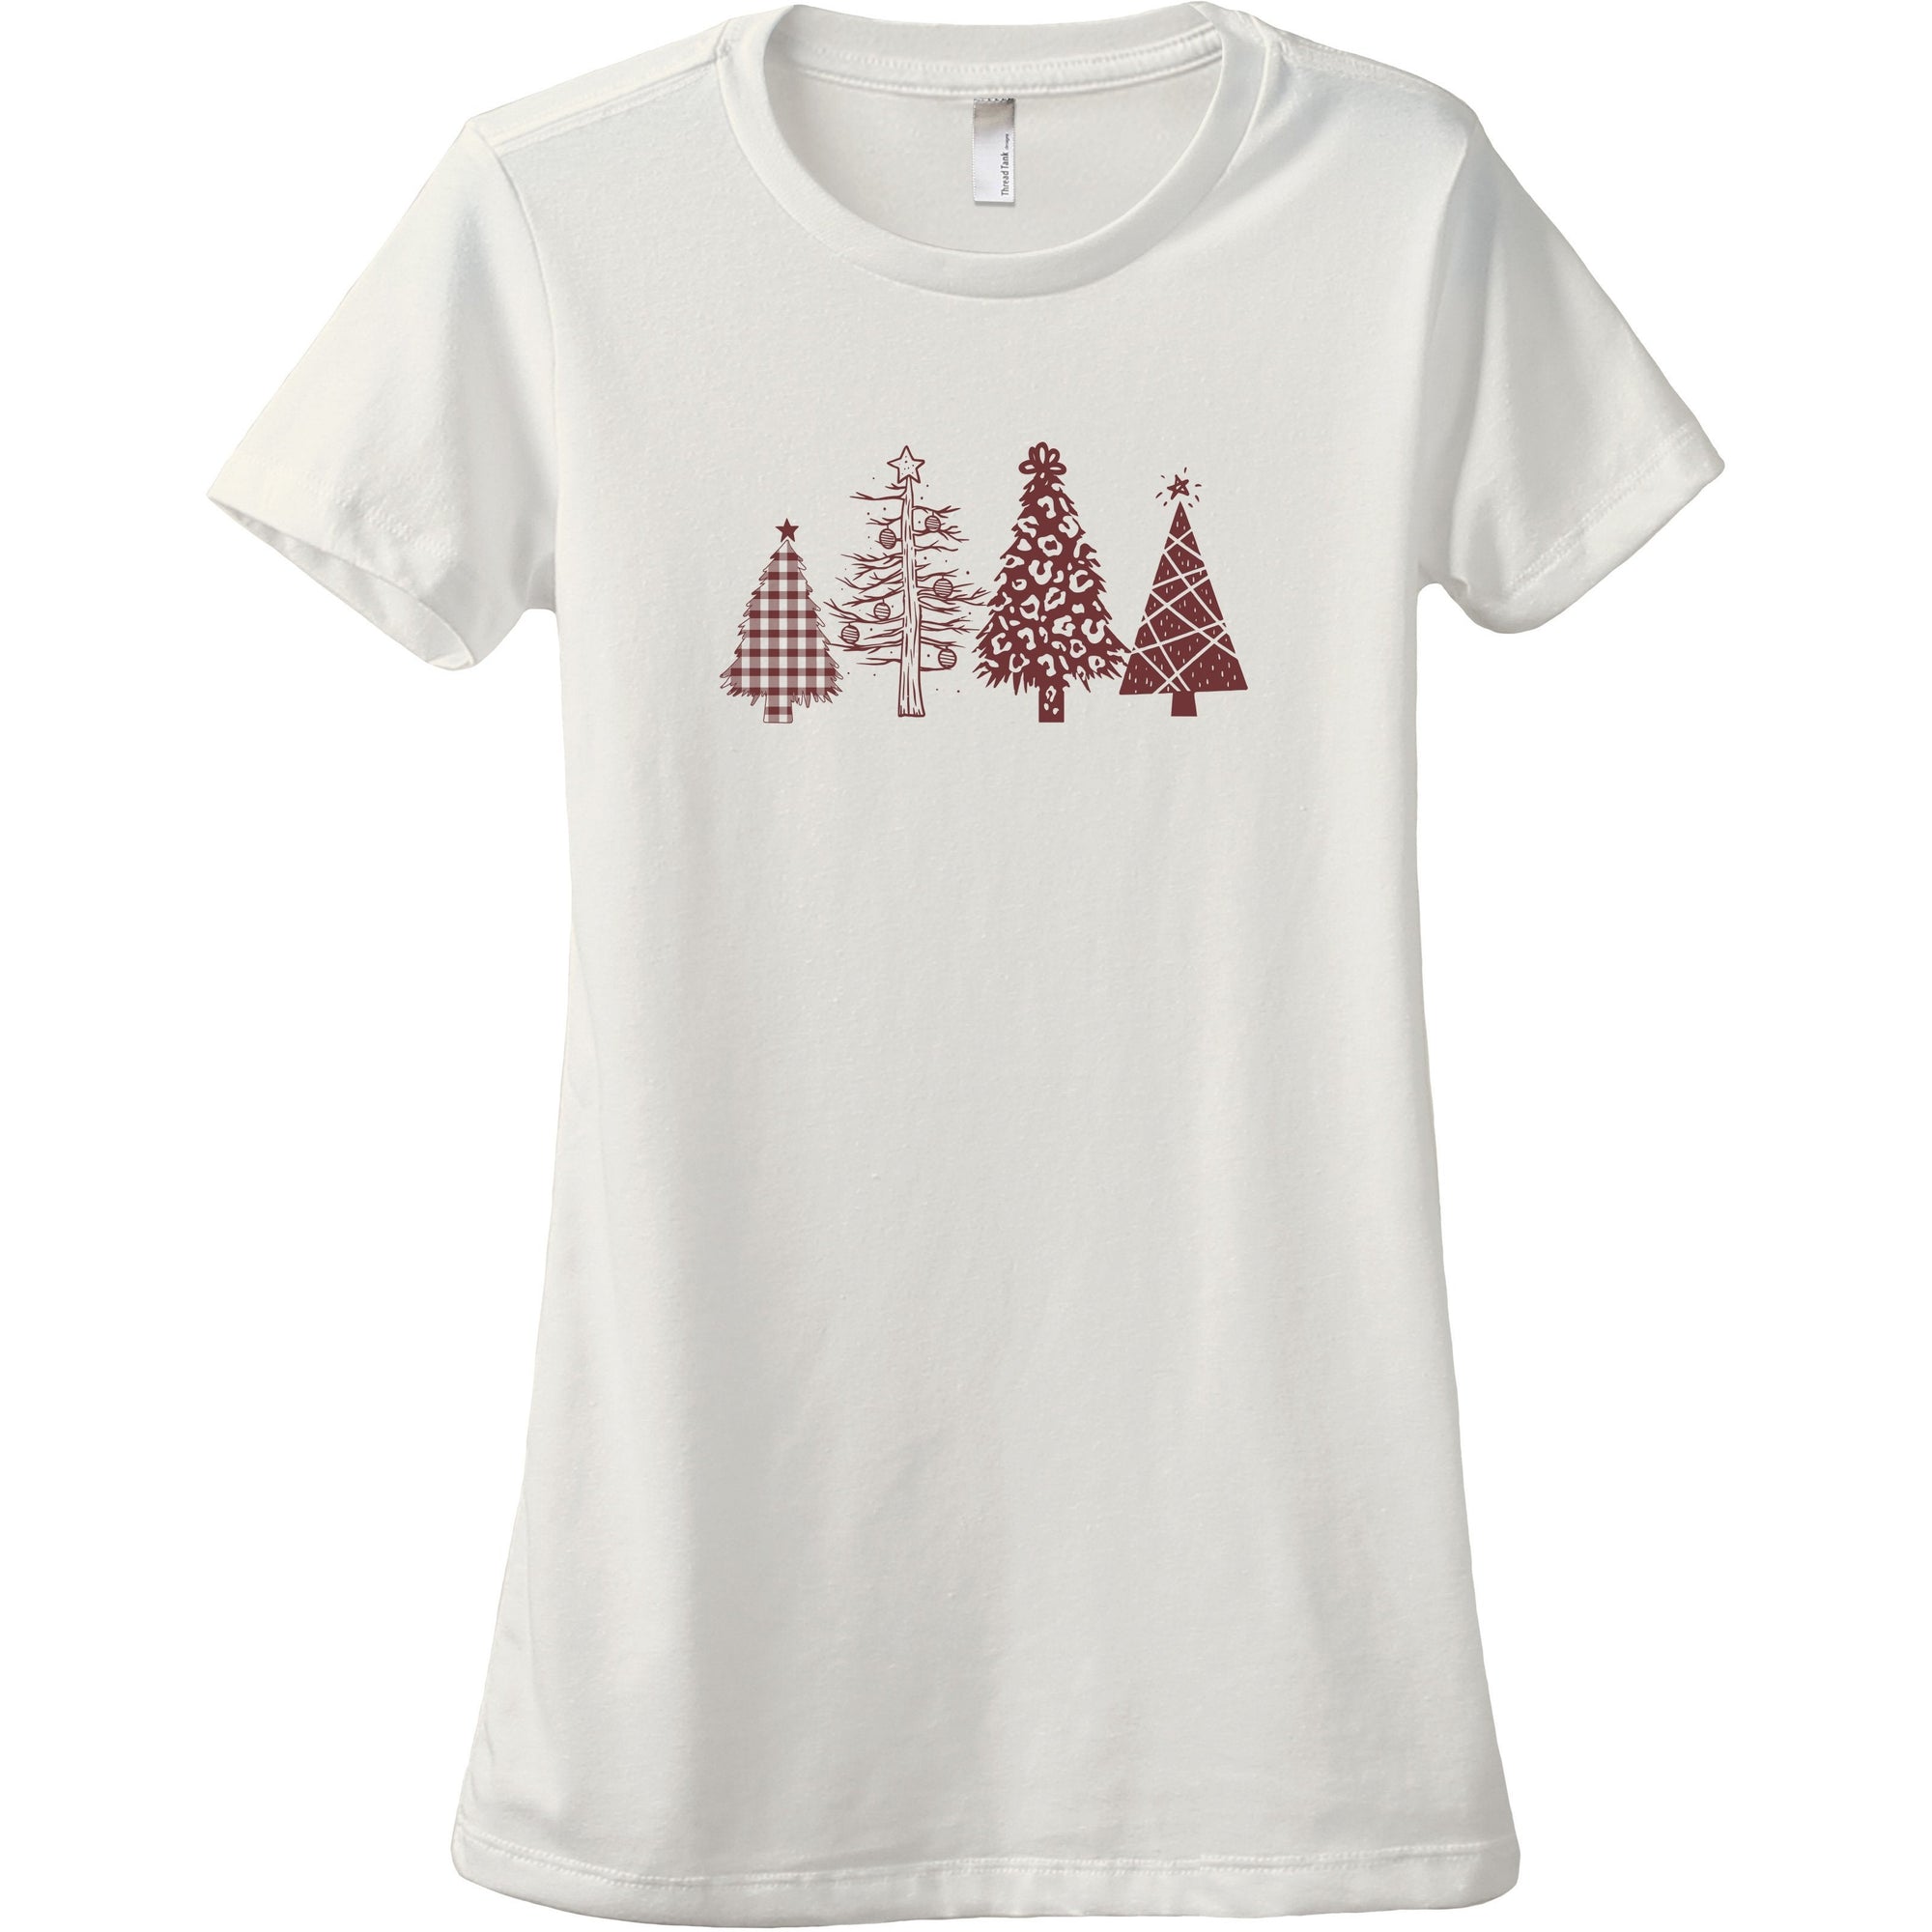 Christmas Tree Season Women's Relaxed Crewneck T-Shirt Top Tee Vintage White Scarlet Scarlet Print